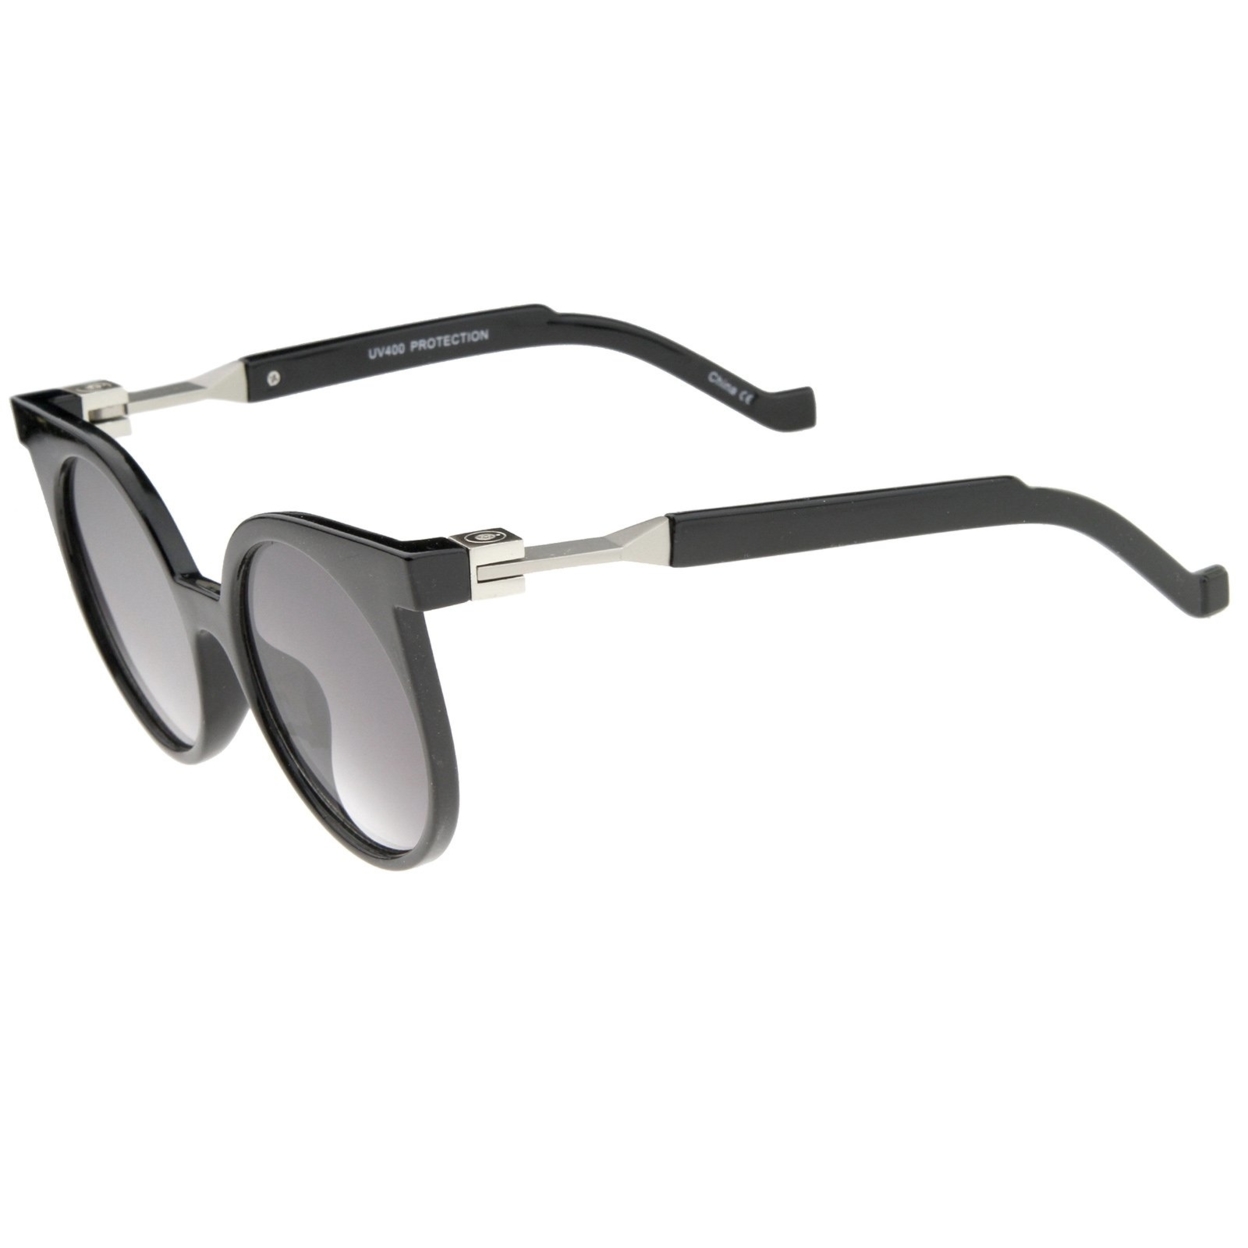 Modern Horn Rimmed Neutral-Colored Flat Lens Round Sunglasses 50mm - Shiny Black / Smoke